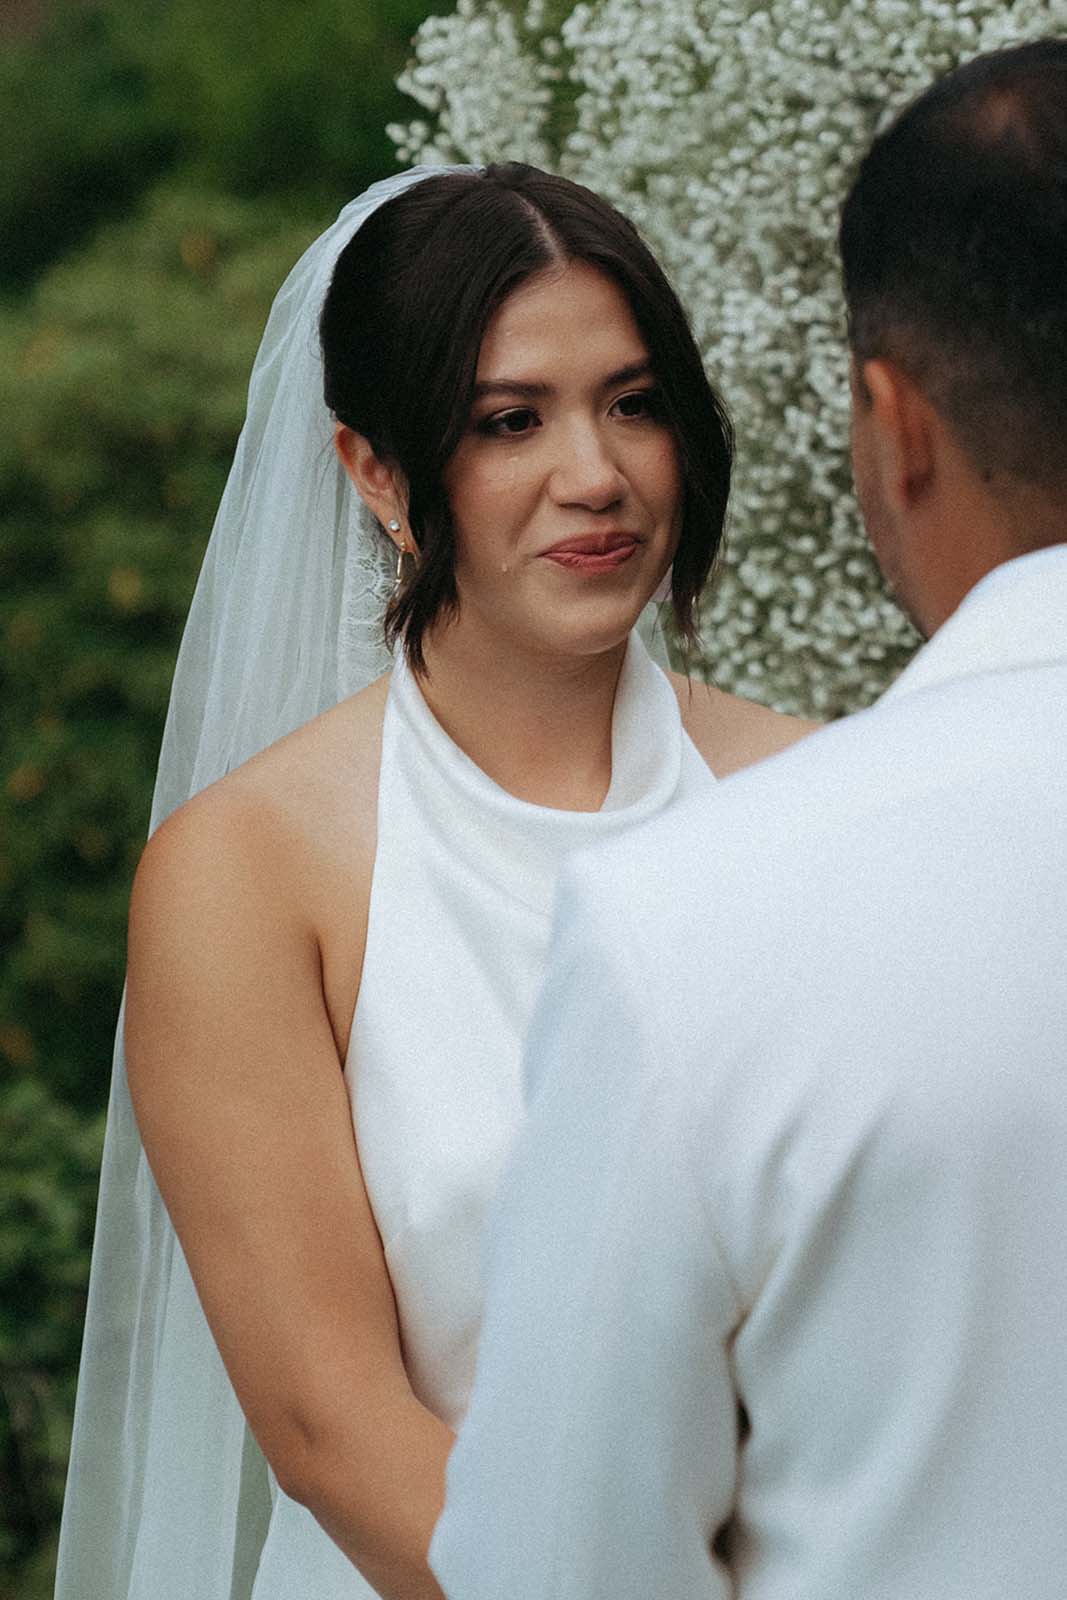 Captivating Close-Up: Bride's Joyful Expression Before Tying the Knot